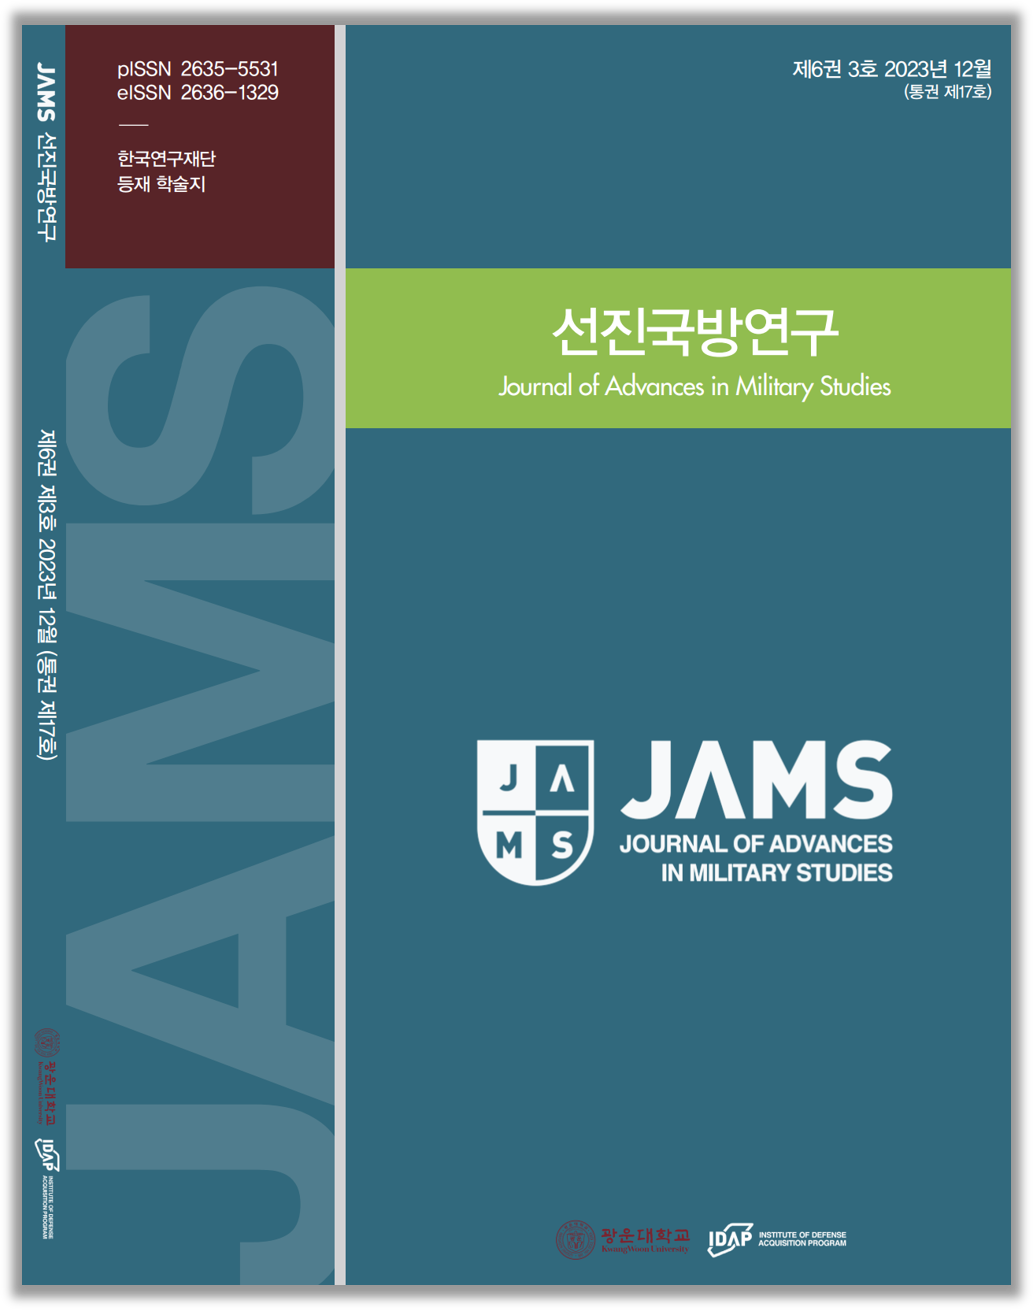 Journal of Advances in Military Studies (JAMS)